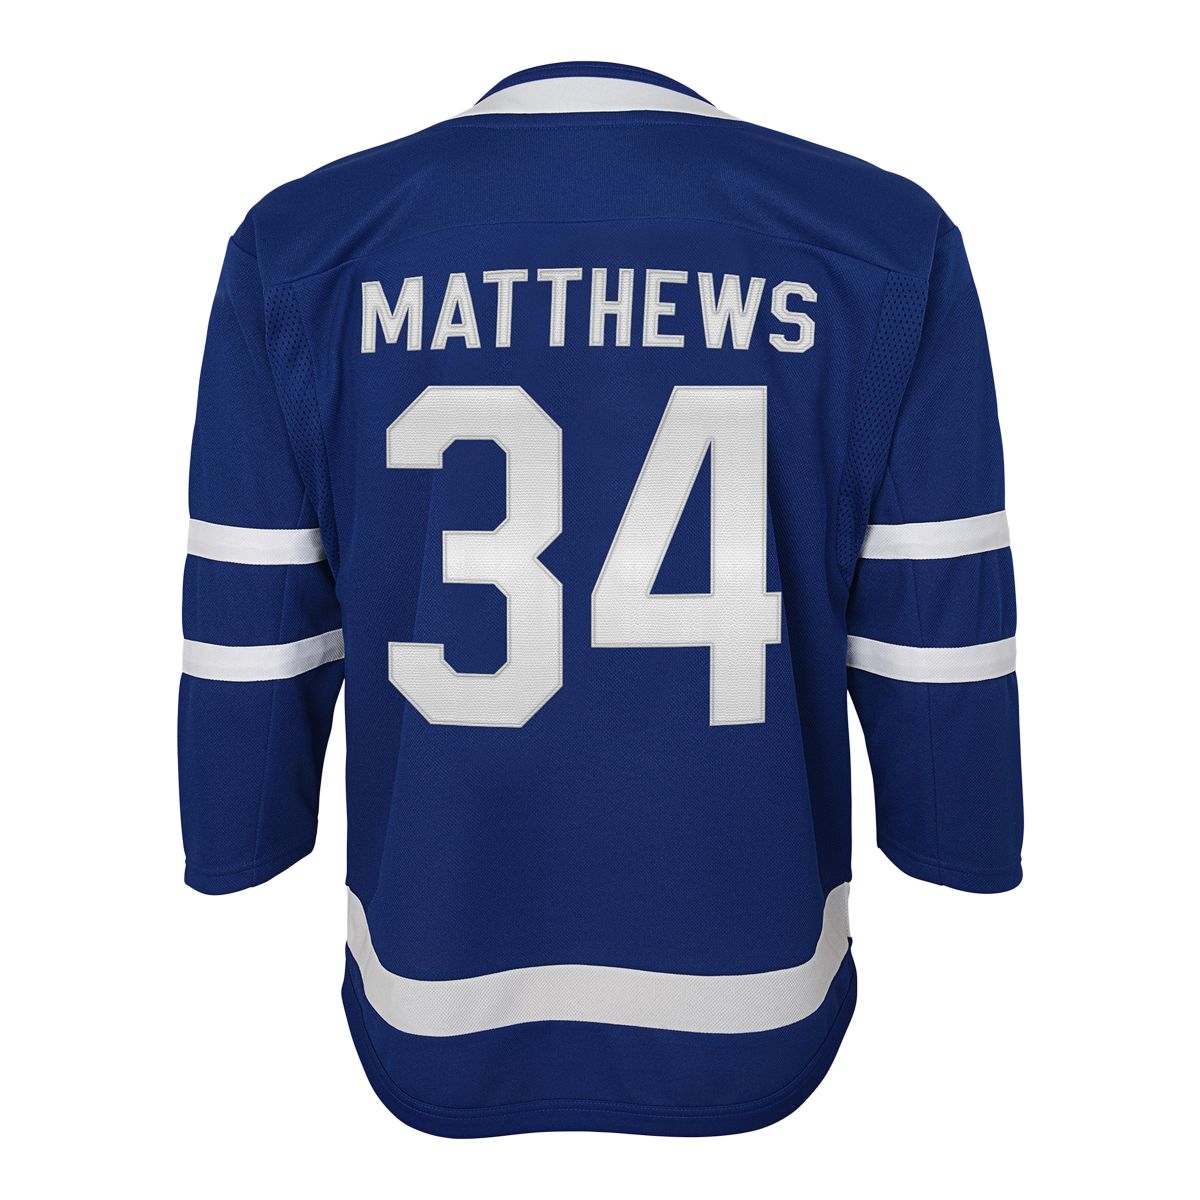 Girls Youth Auston Matthews White Toronto Maple Leafs Fashion - Jersey